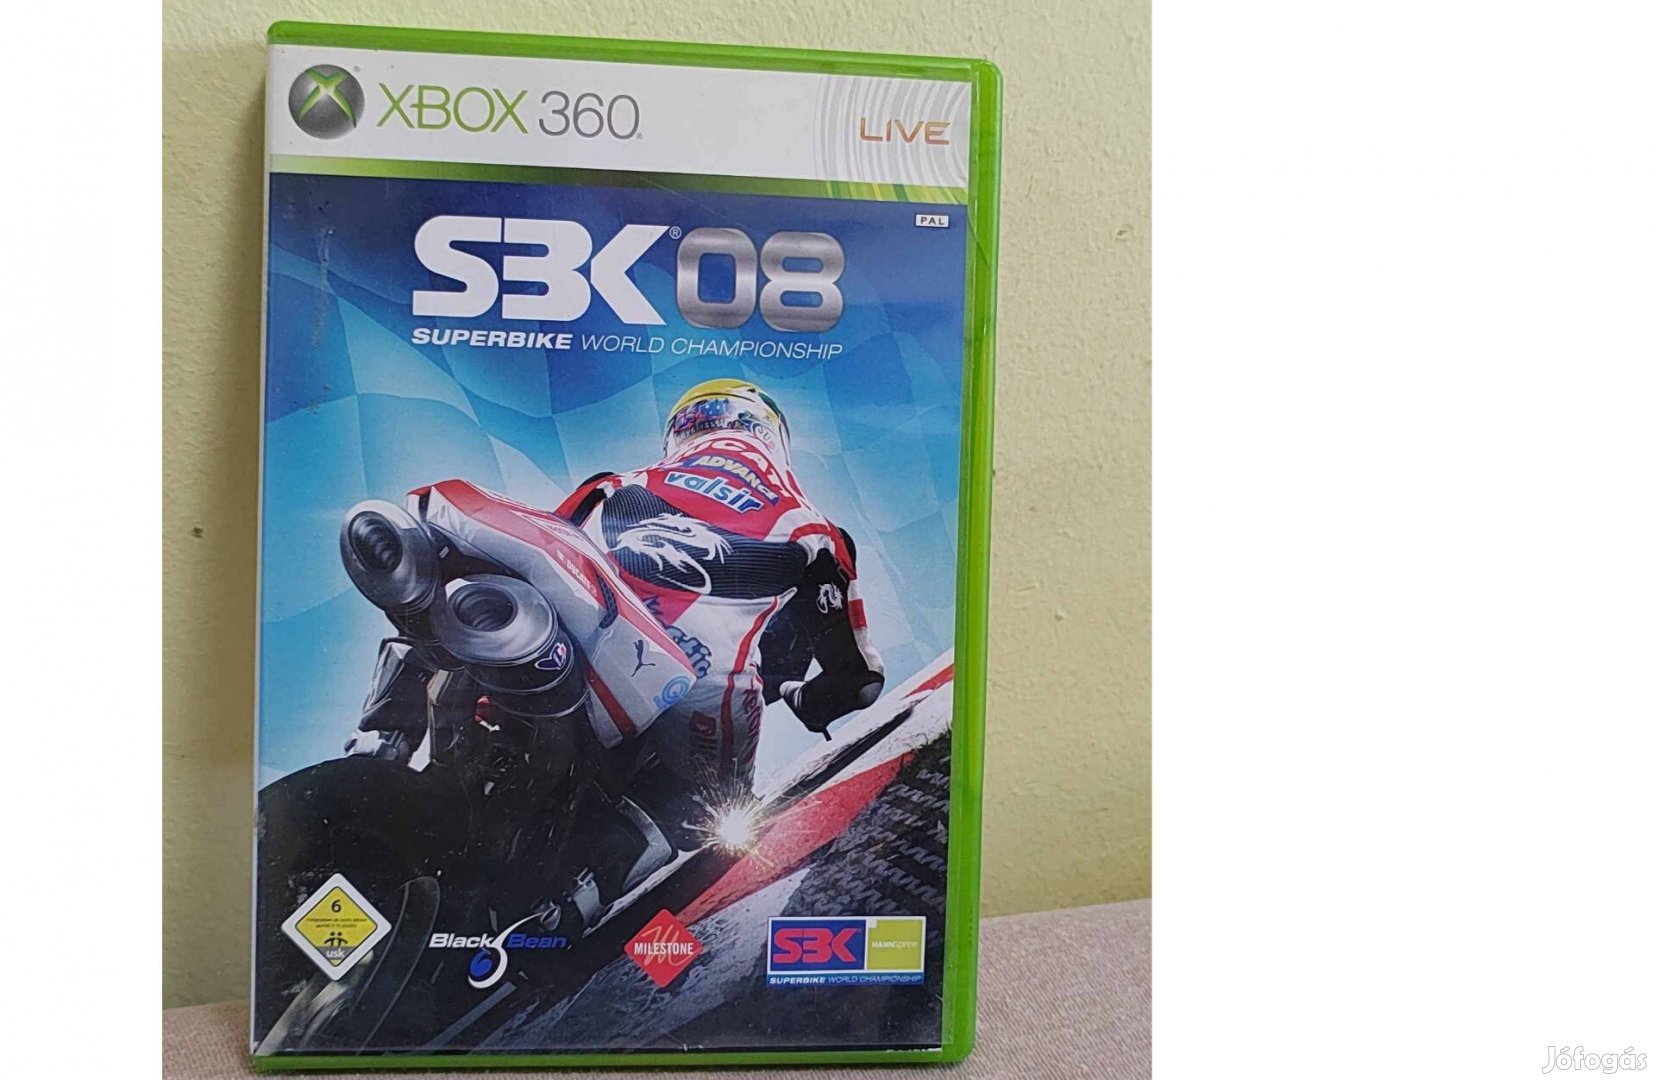 Xbox 360 SBK 08 - foxpost, posta OK